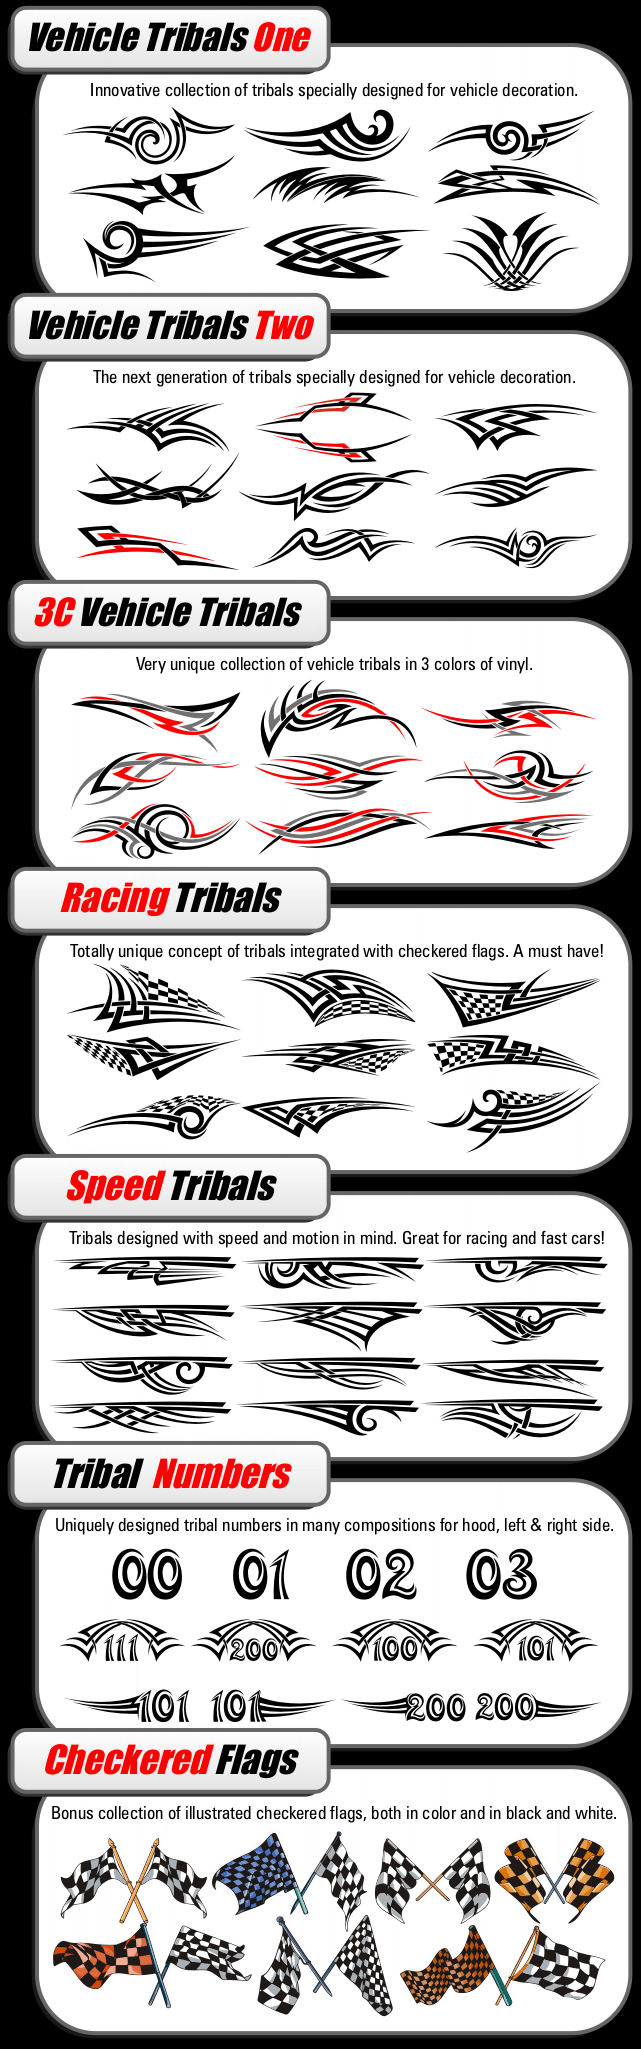 Vehicle Tribals Mega Pack Samples